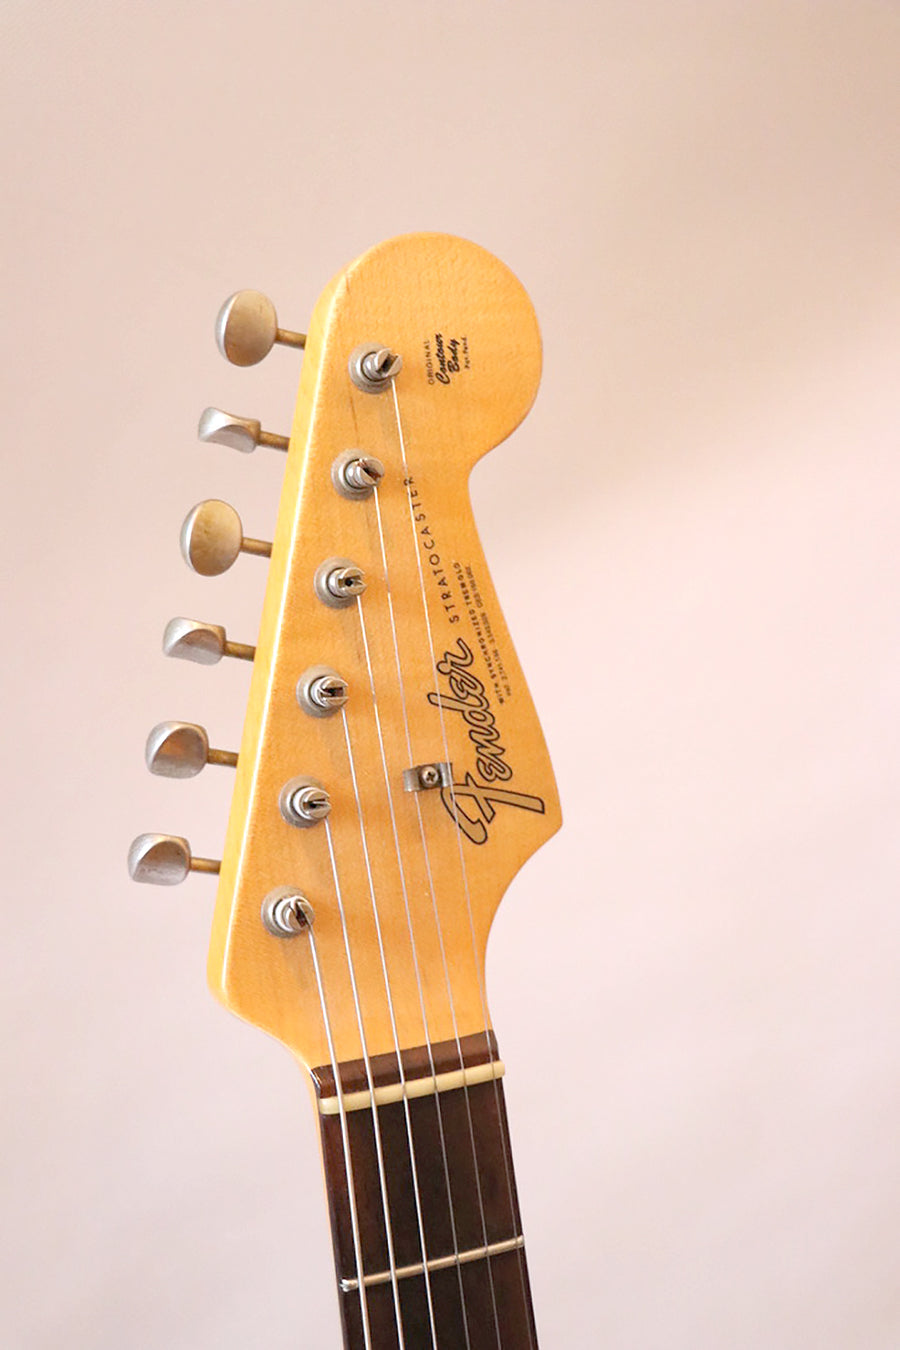 Fender Custom Shop 1964 Stratocaster Journeyman Relic NAMM Limited-Edition 2018